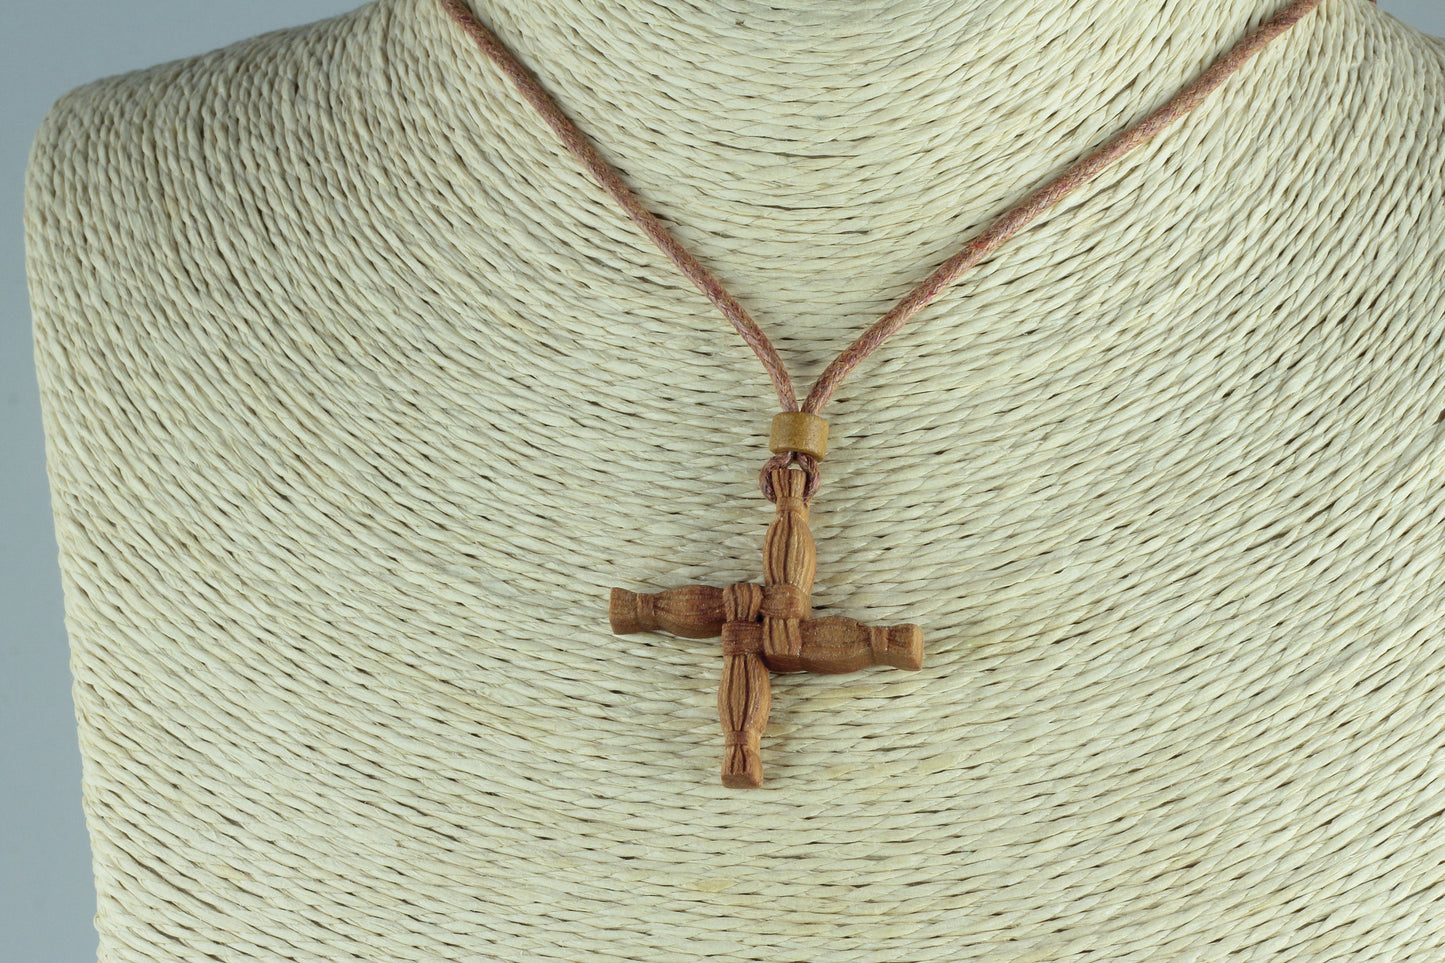 Celtic Charm: The Enchanting St. Brigid's Cross Wood Necklace